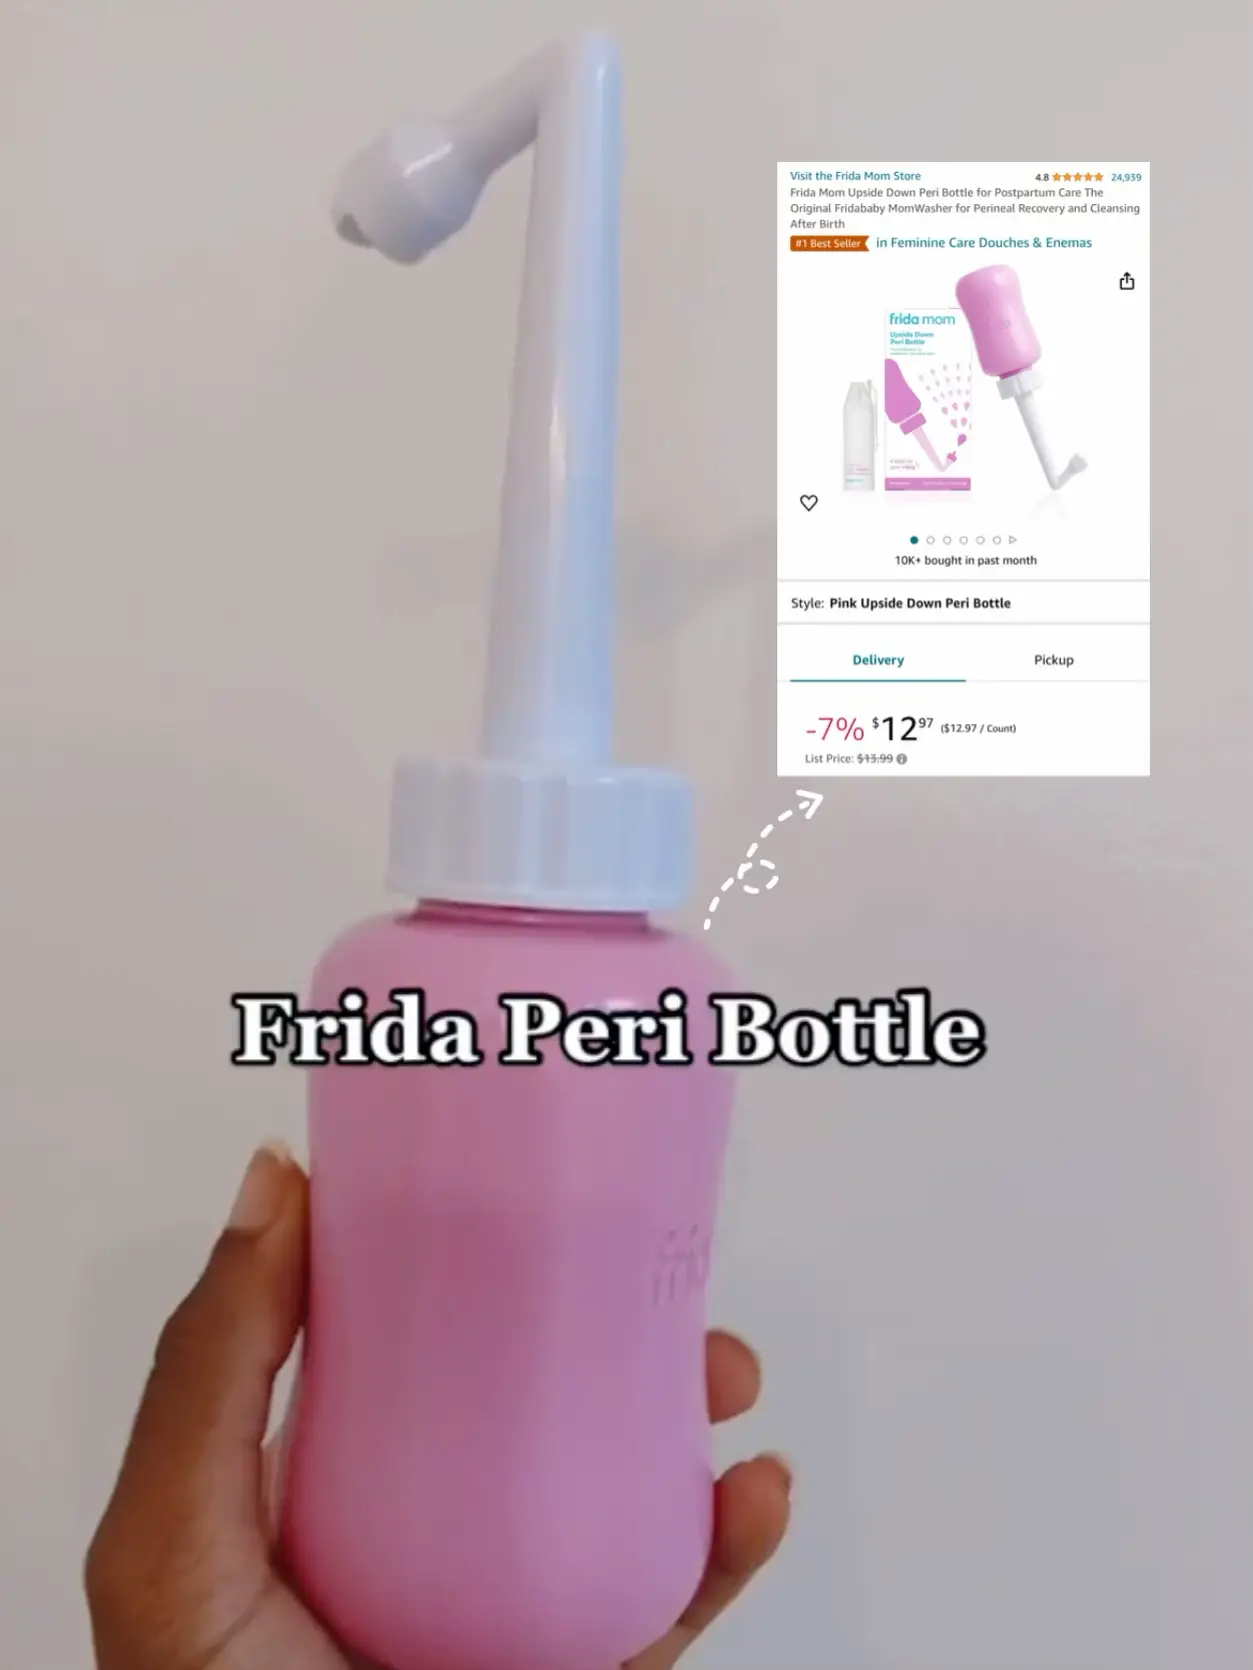 Fridababy Peri Bottle for PostPartum Care 